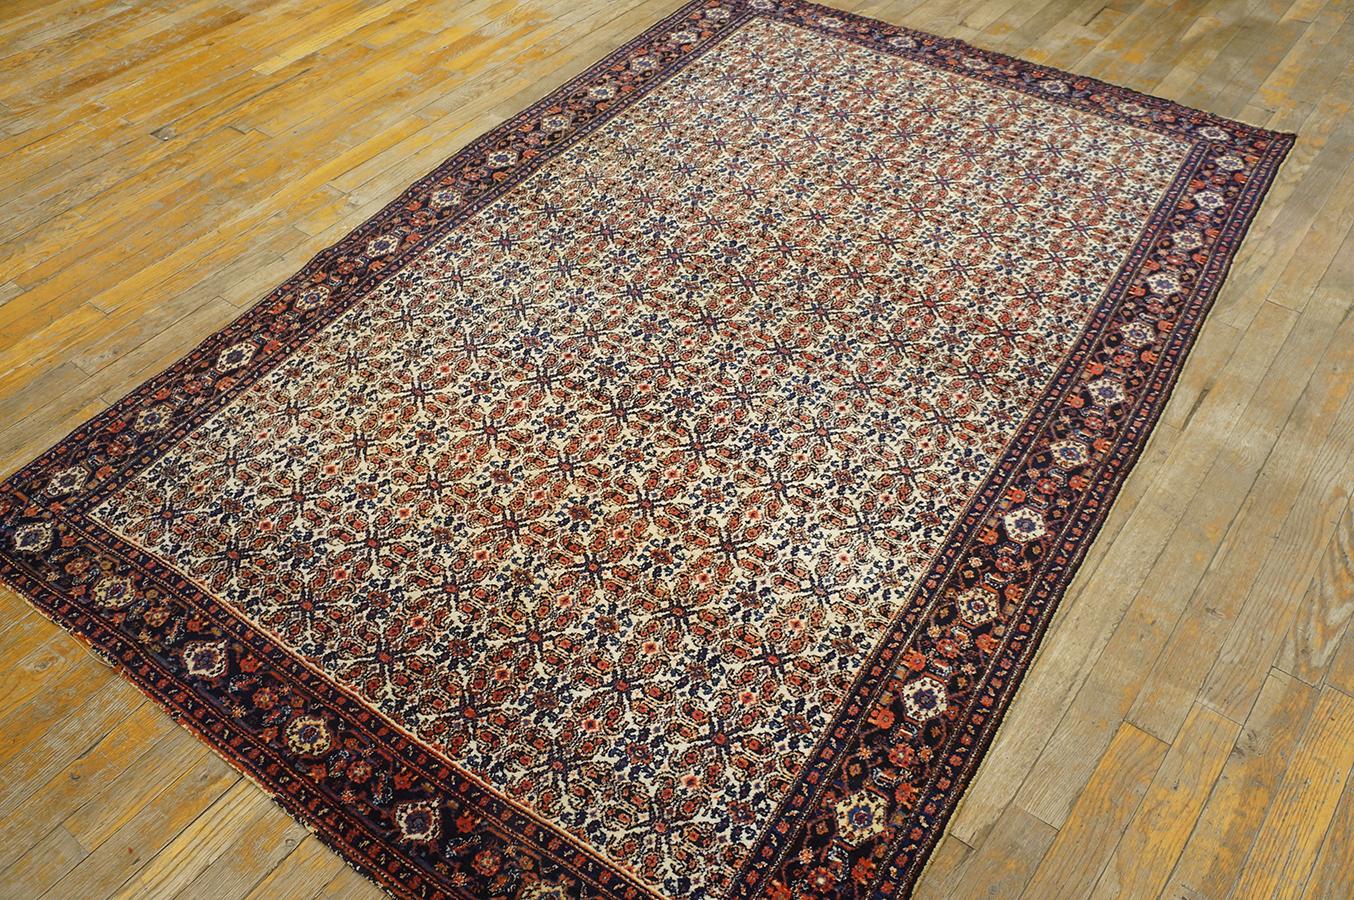 19th Century W. Persian Senneh Carpet on Silk Warp Foundation.
4'4'' x 6'8'' - 132 x 203 